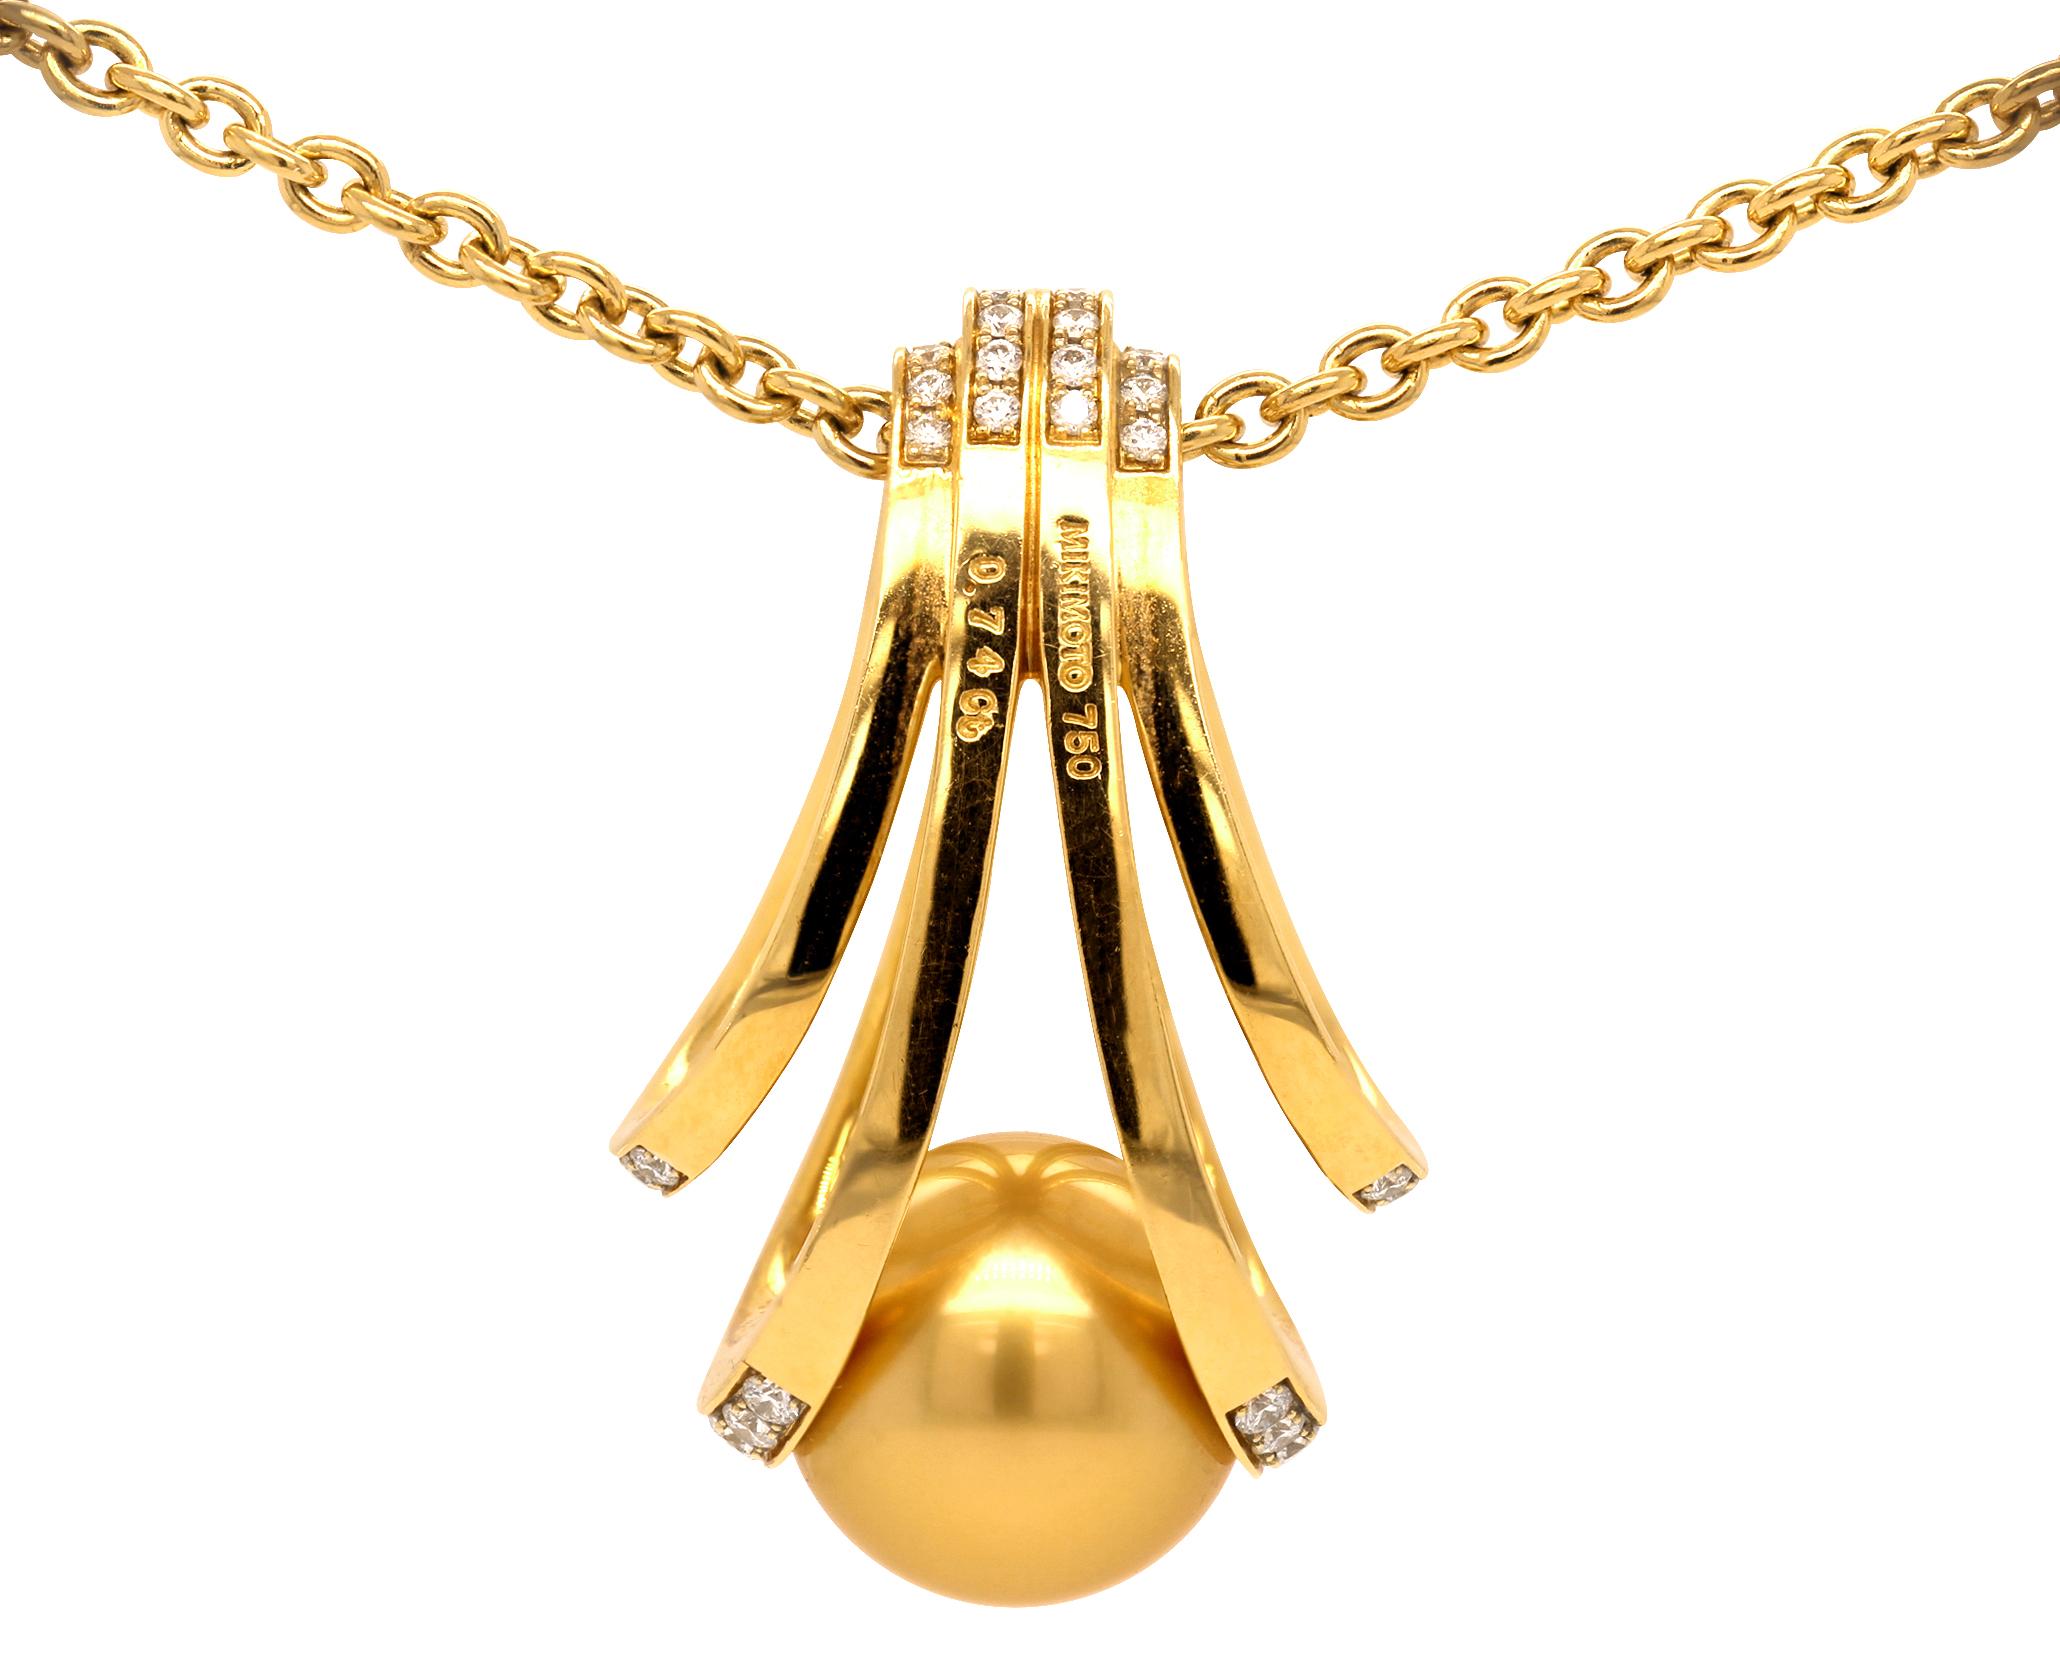 Uncut Mikimoto South-Sea Gold Pearl & Diamond ‘World of Creativity’ Pendant - 18K Gold